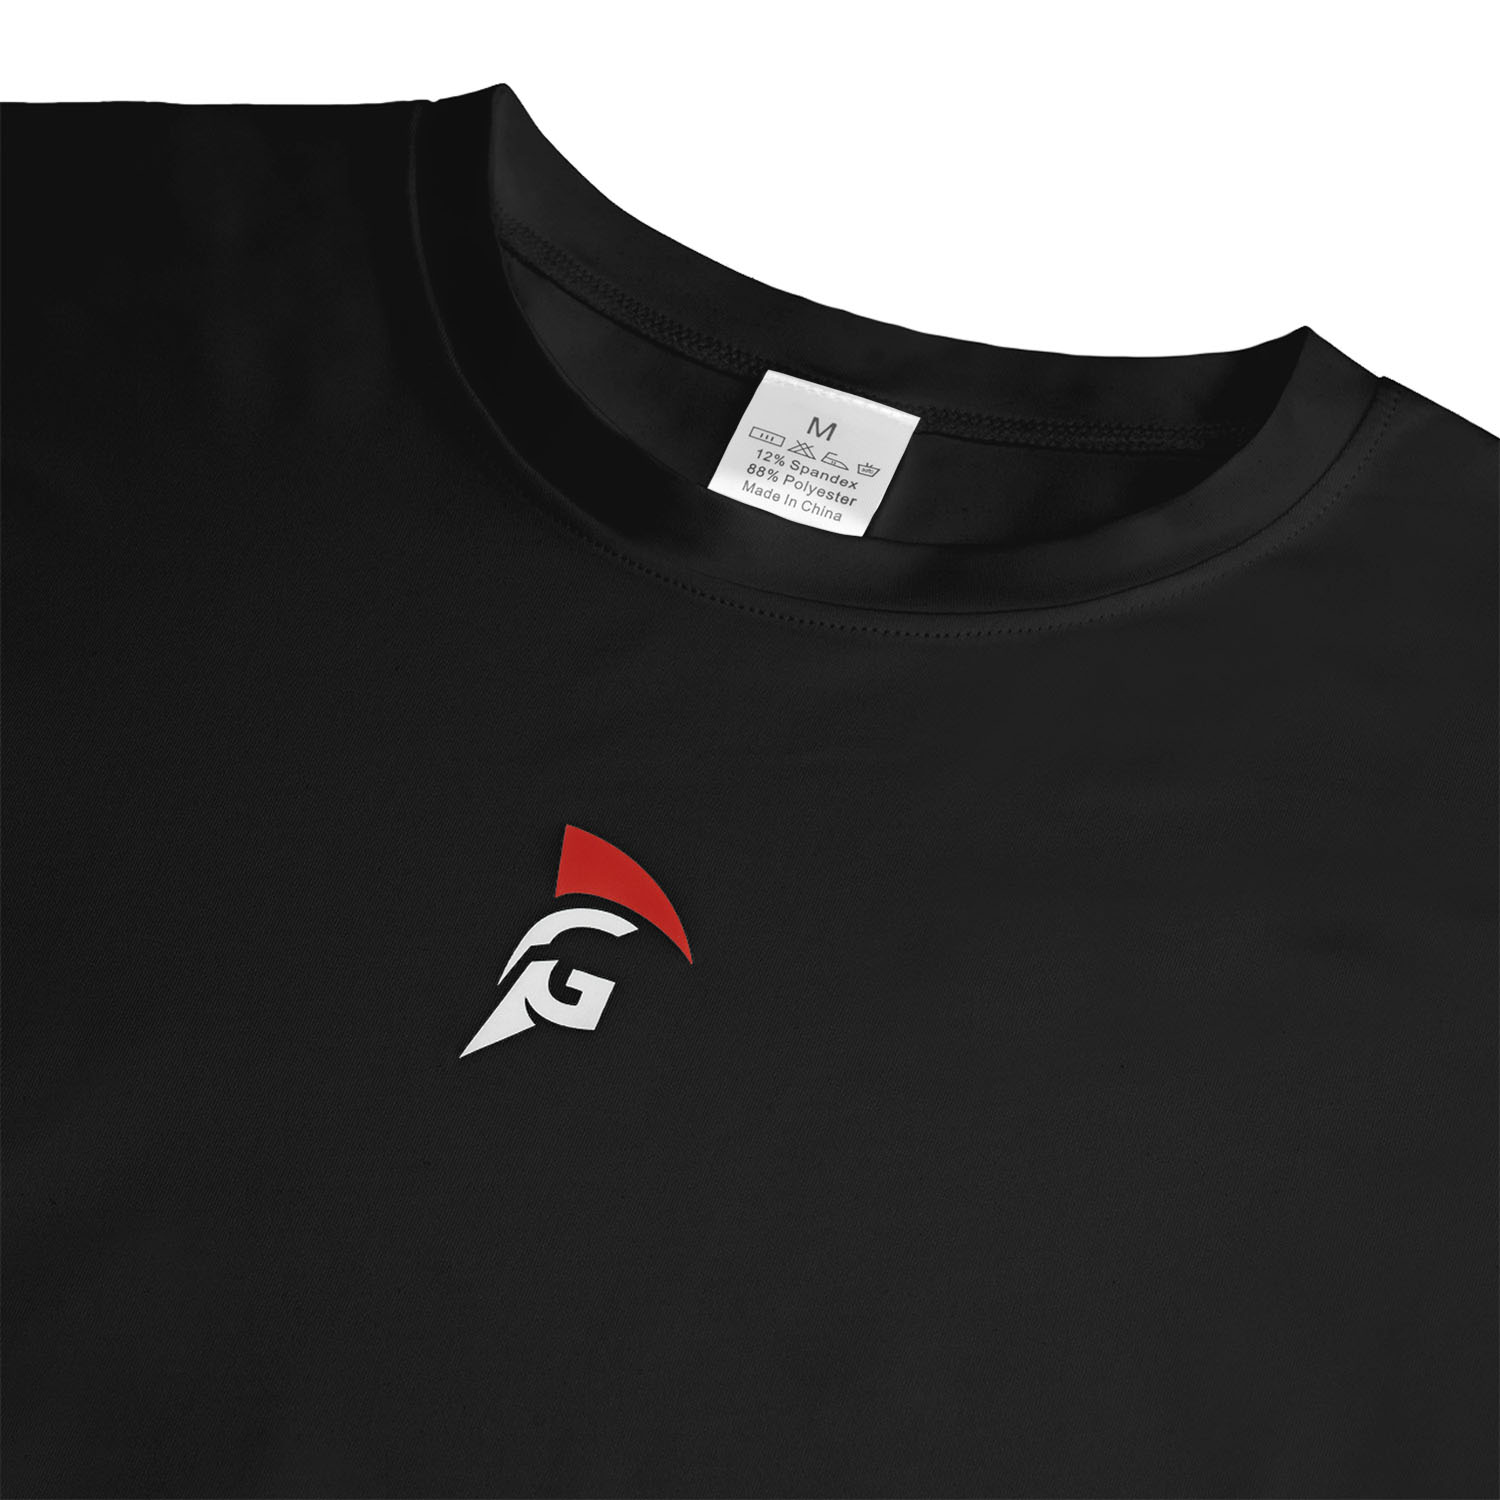 gladiator sports compression shirt for men black logo detail picture